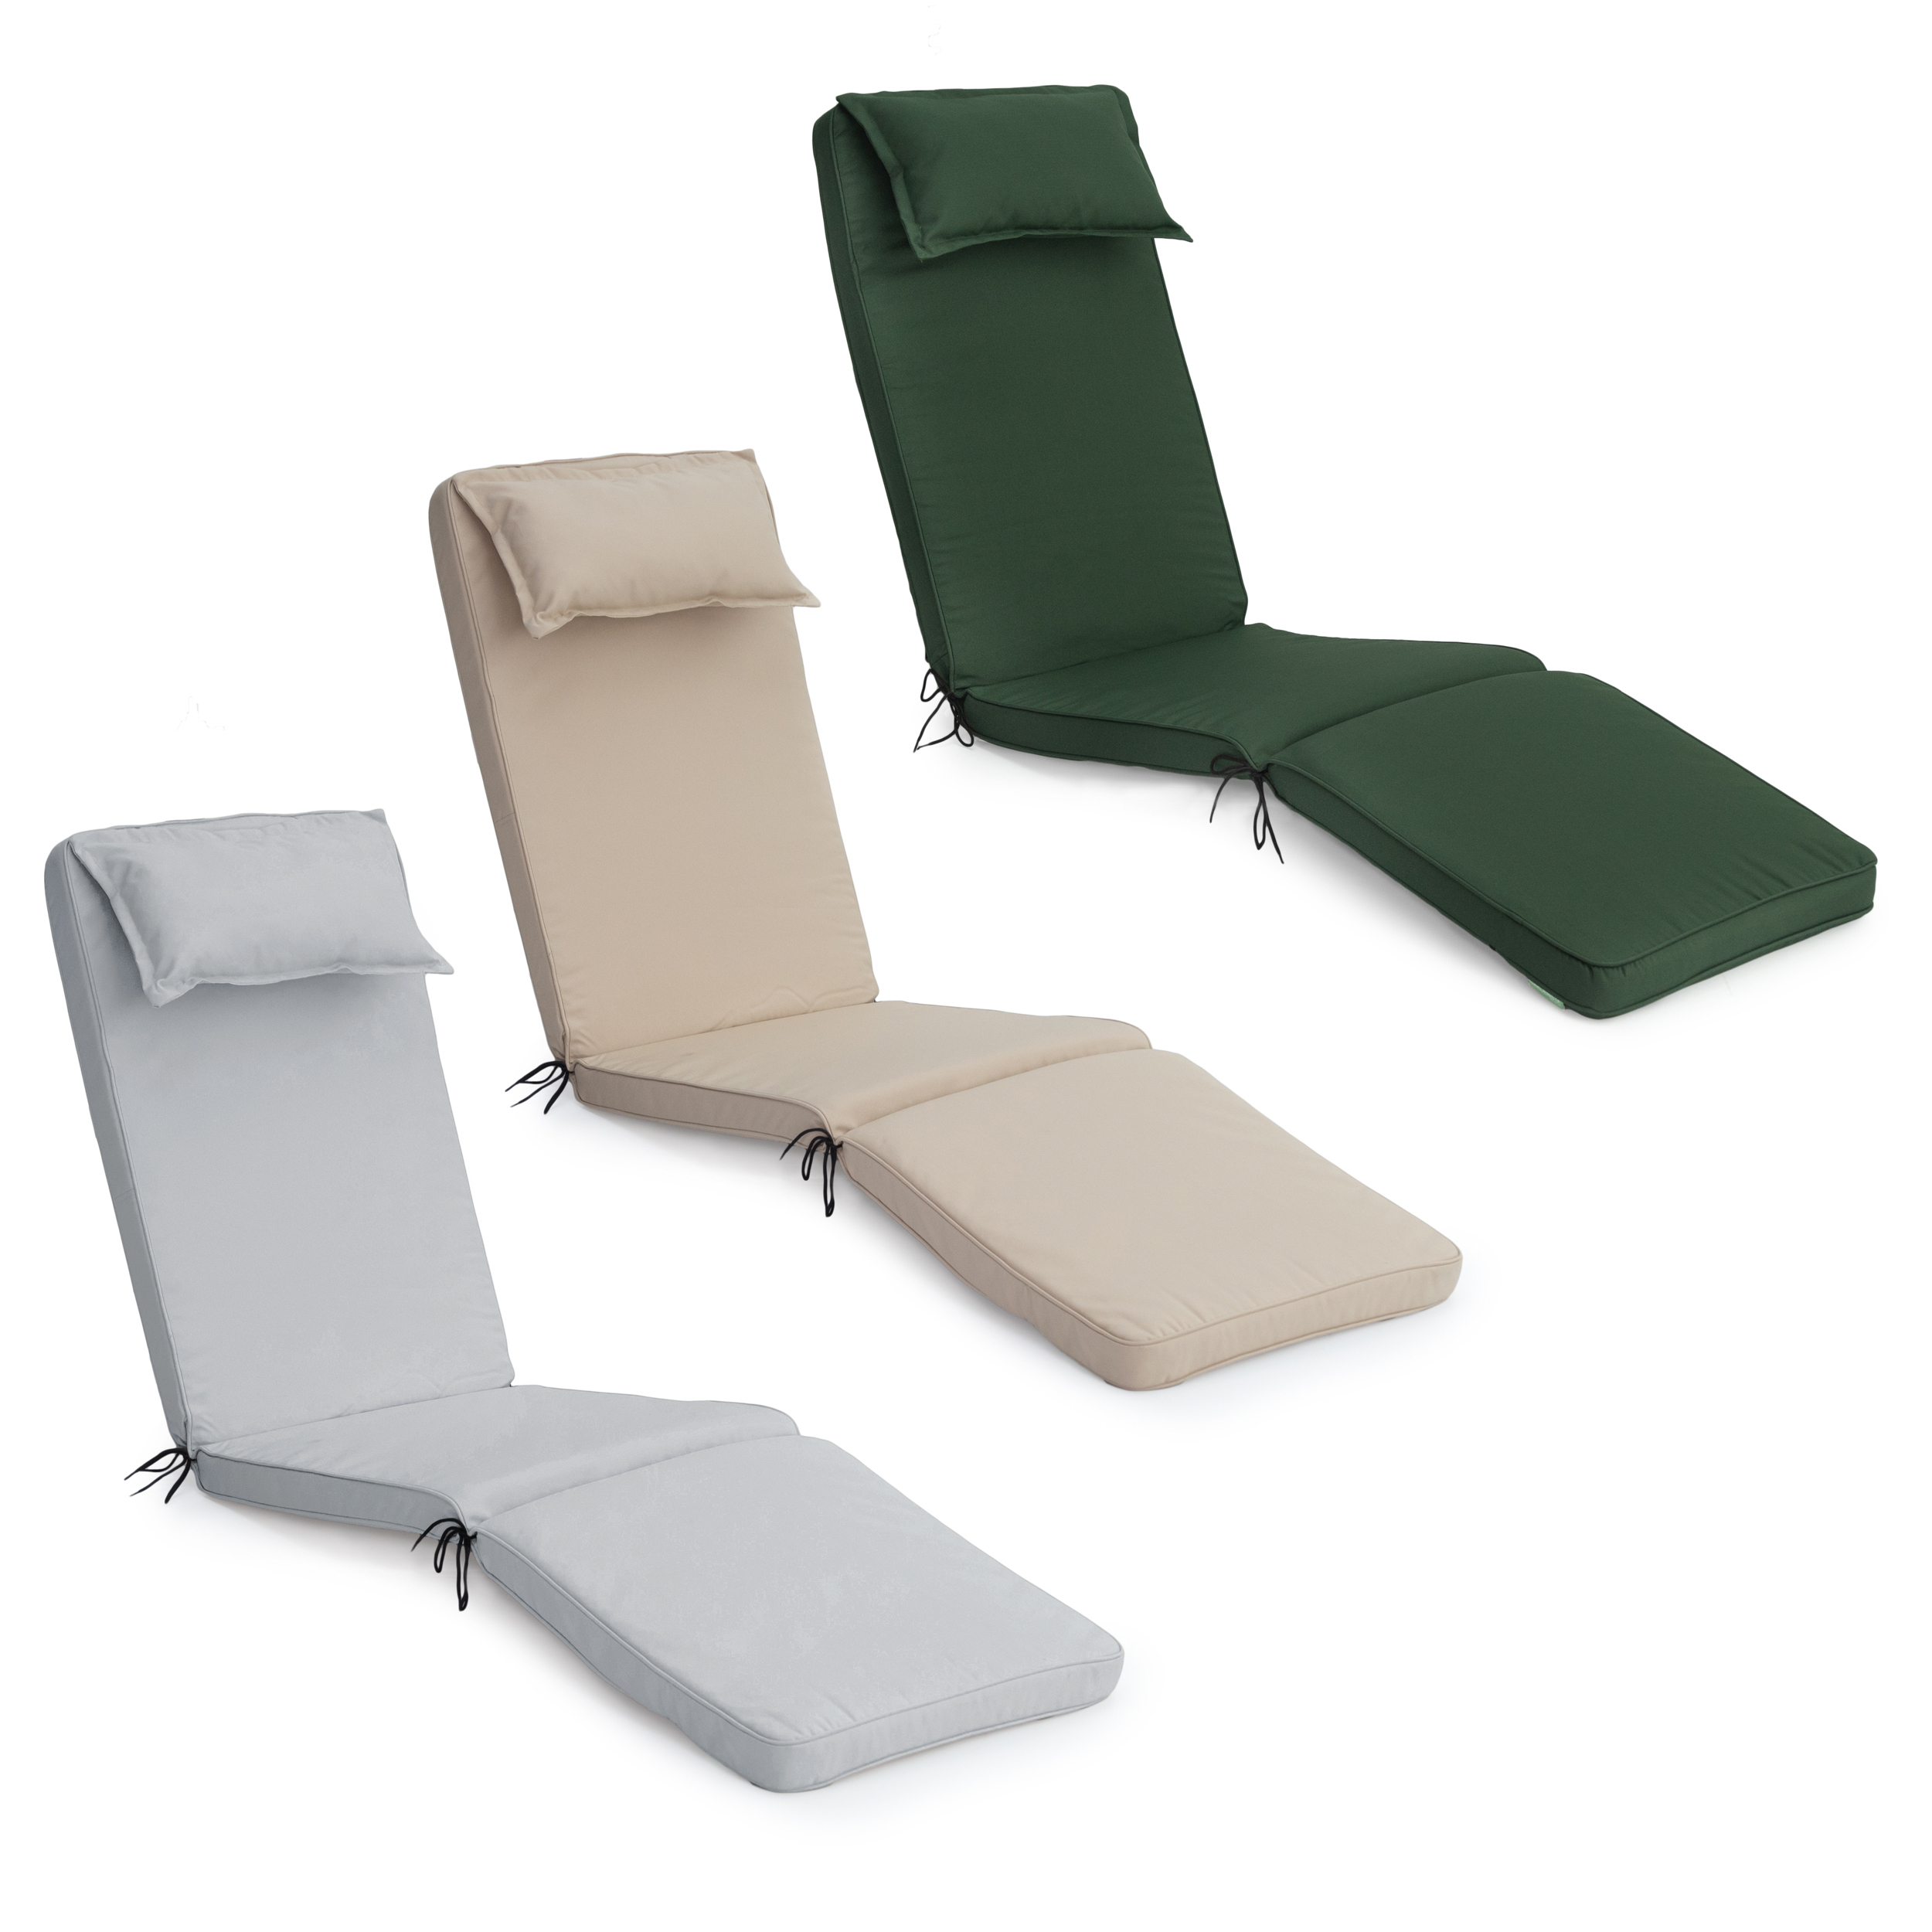 Garden Furniture Cushions Pads Sun, Outdoor Furniture Chair Cushions Replacement